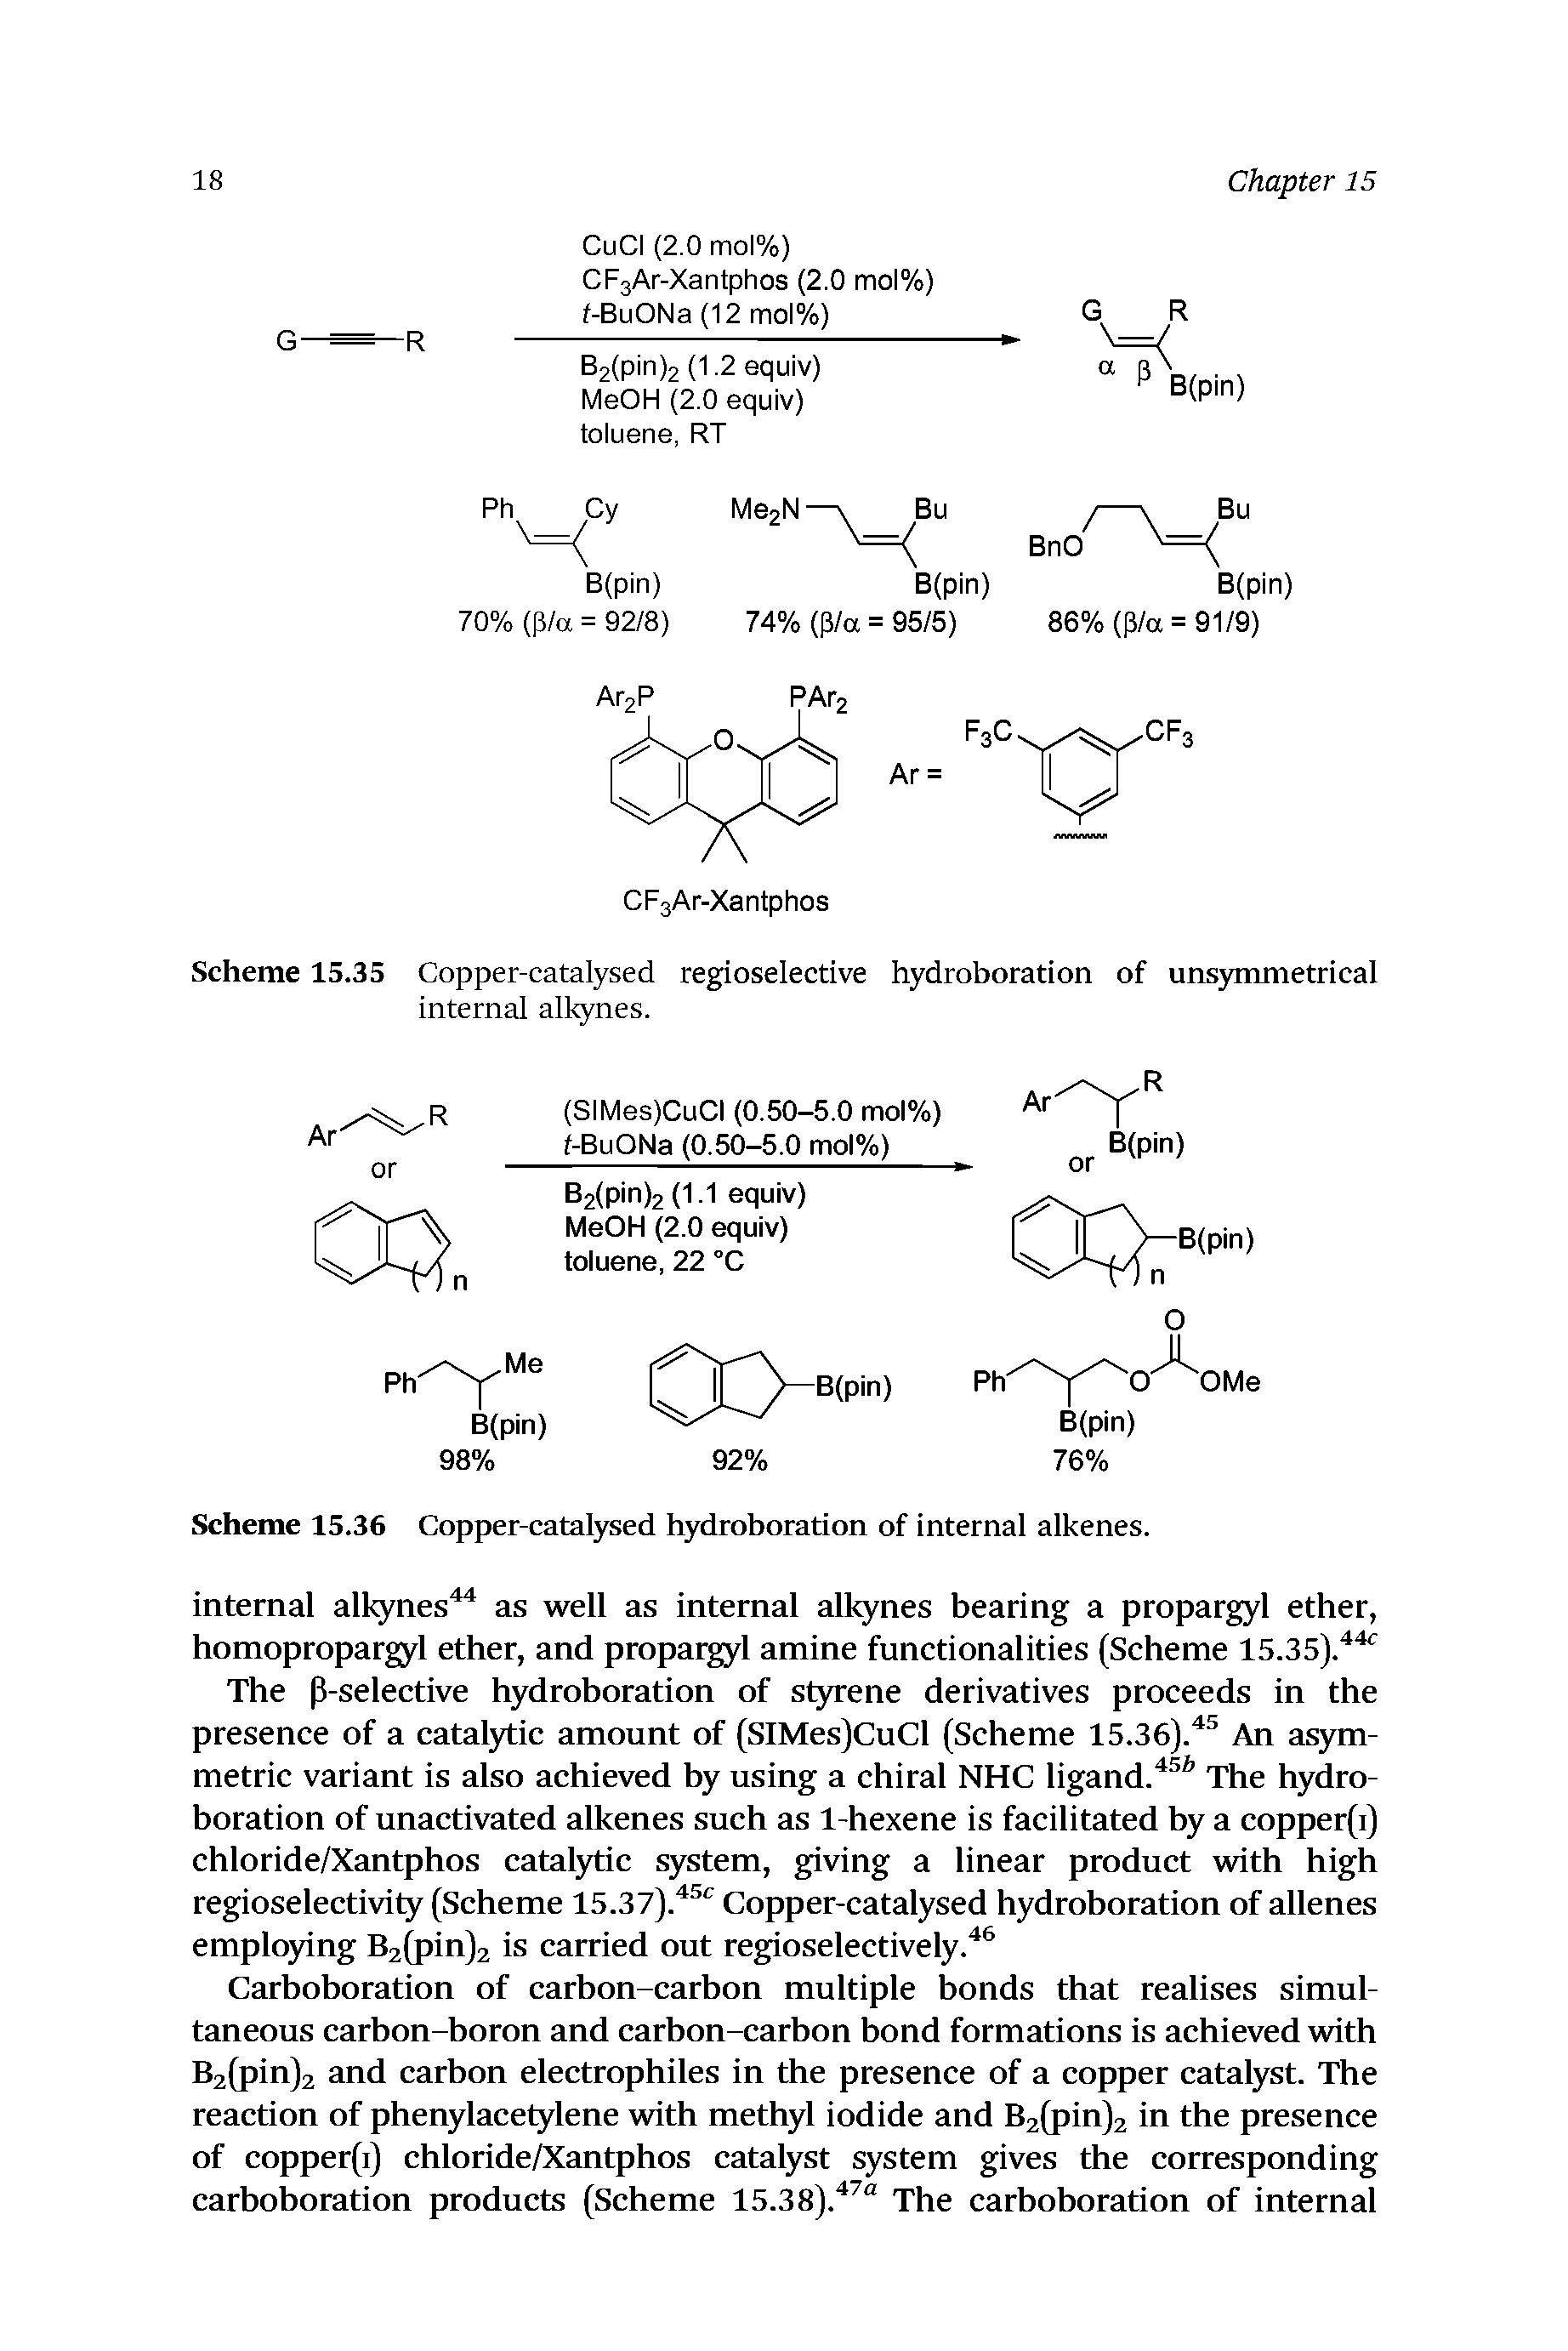 Scheme 15.36 Copper-catalysed hydroboration of internal alkenes.